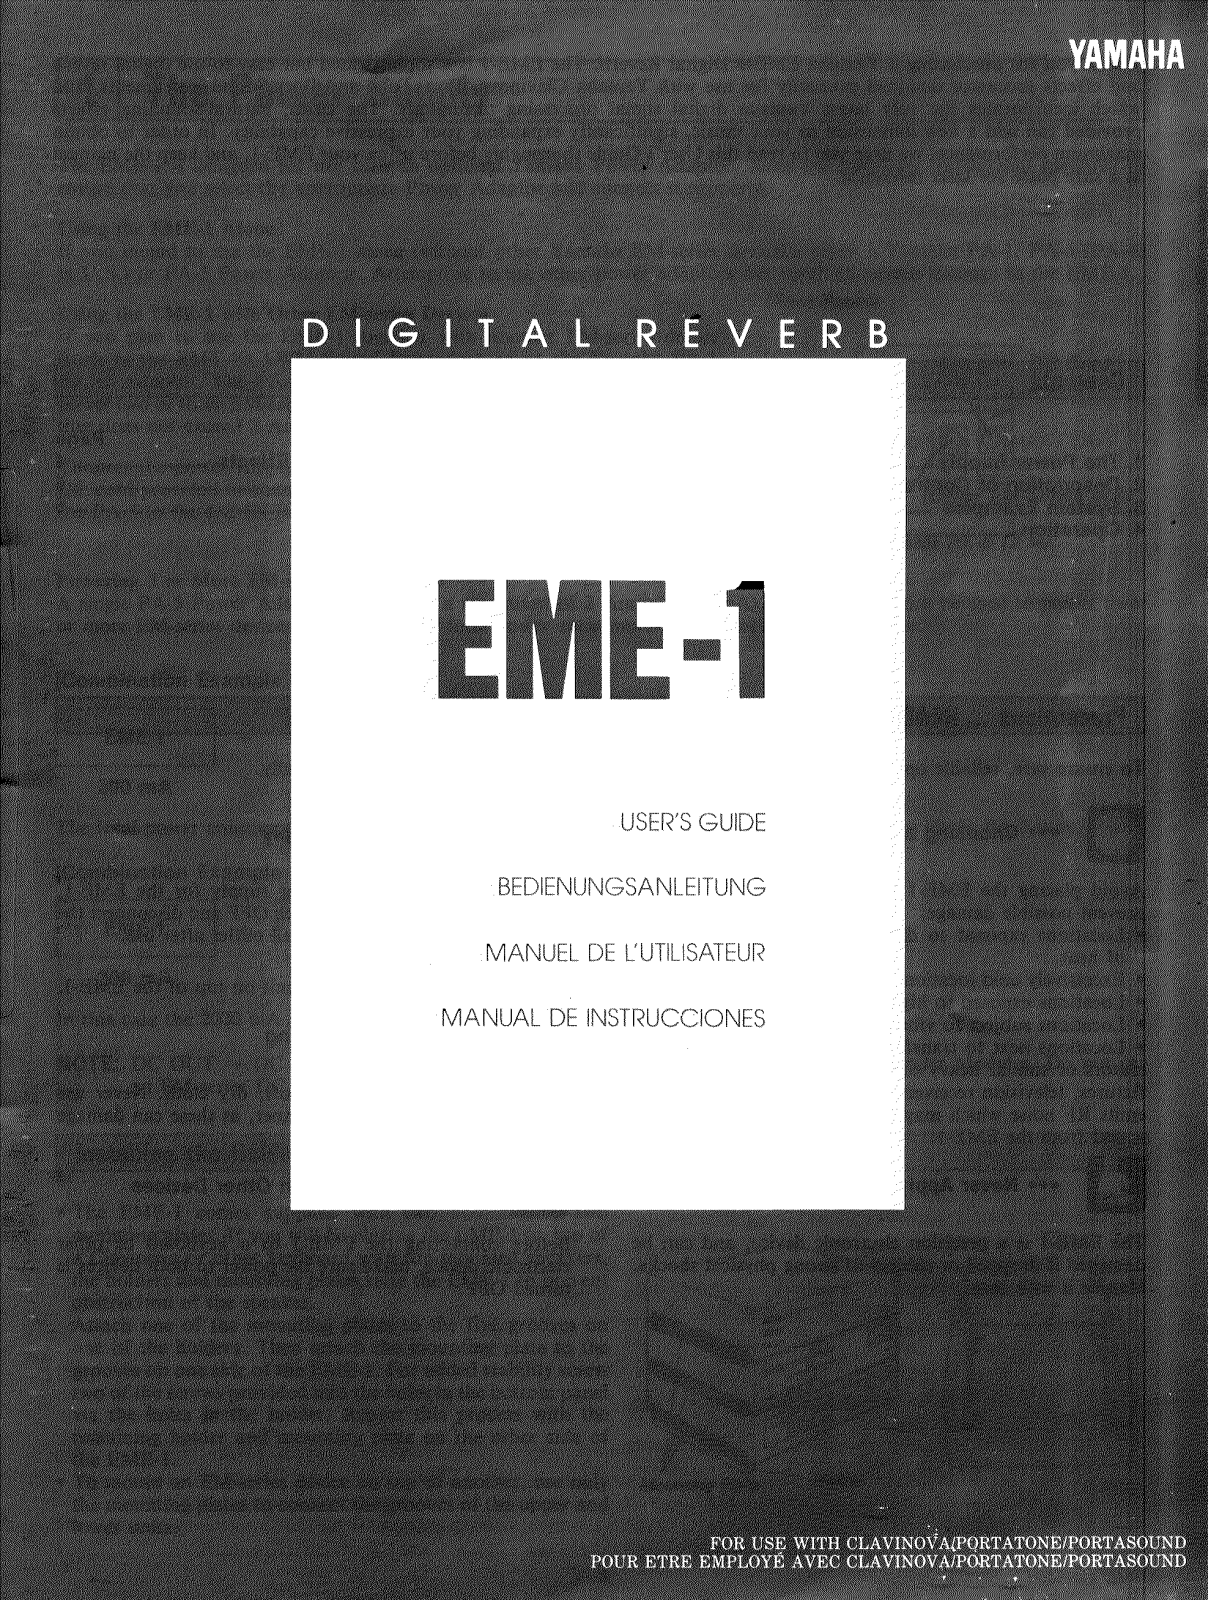 Yamaha EME-1 User Guide